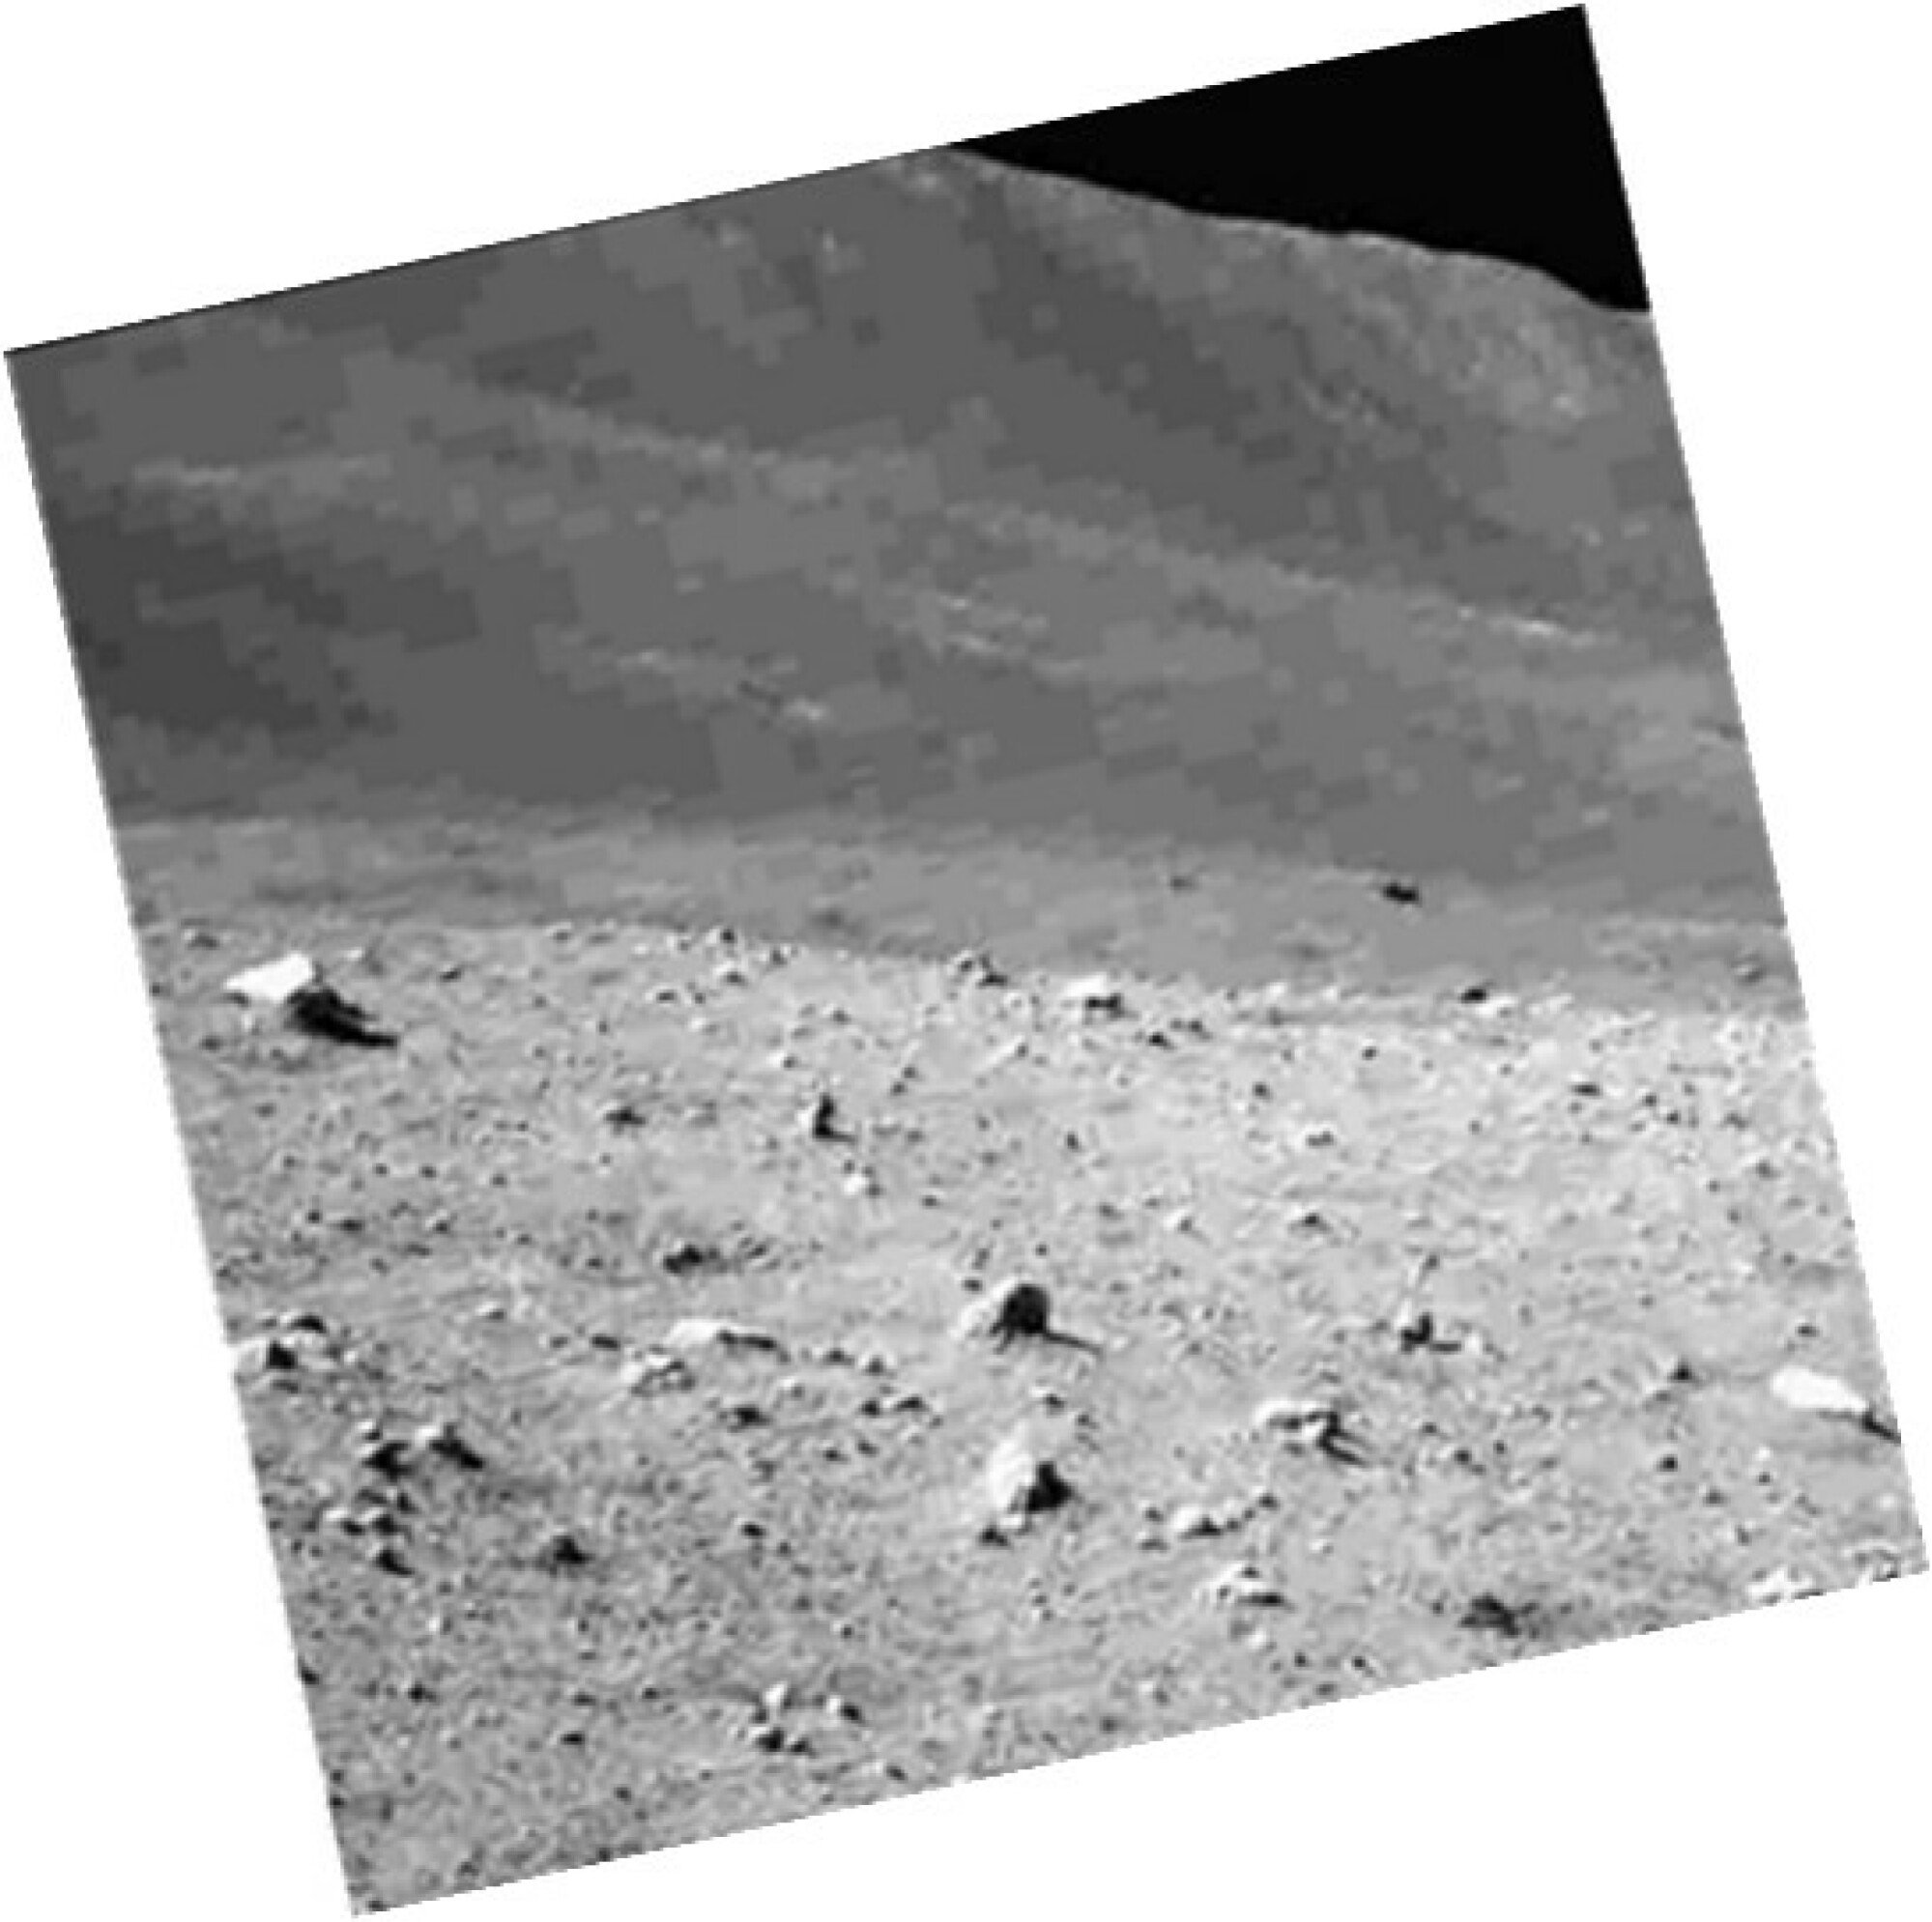 SLIM spacecraft imaging the lunar surface